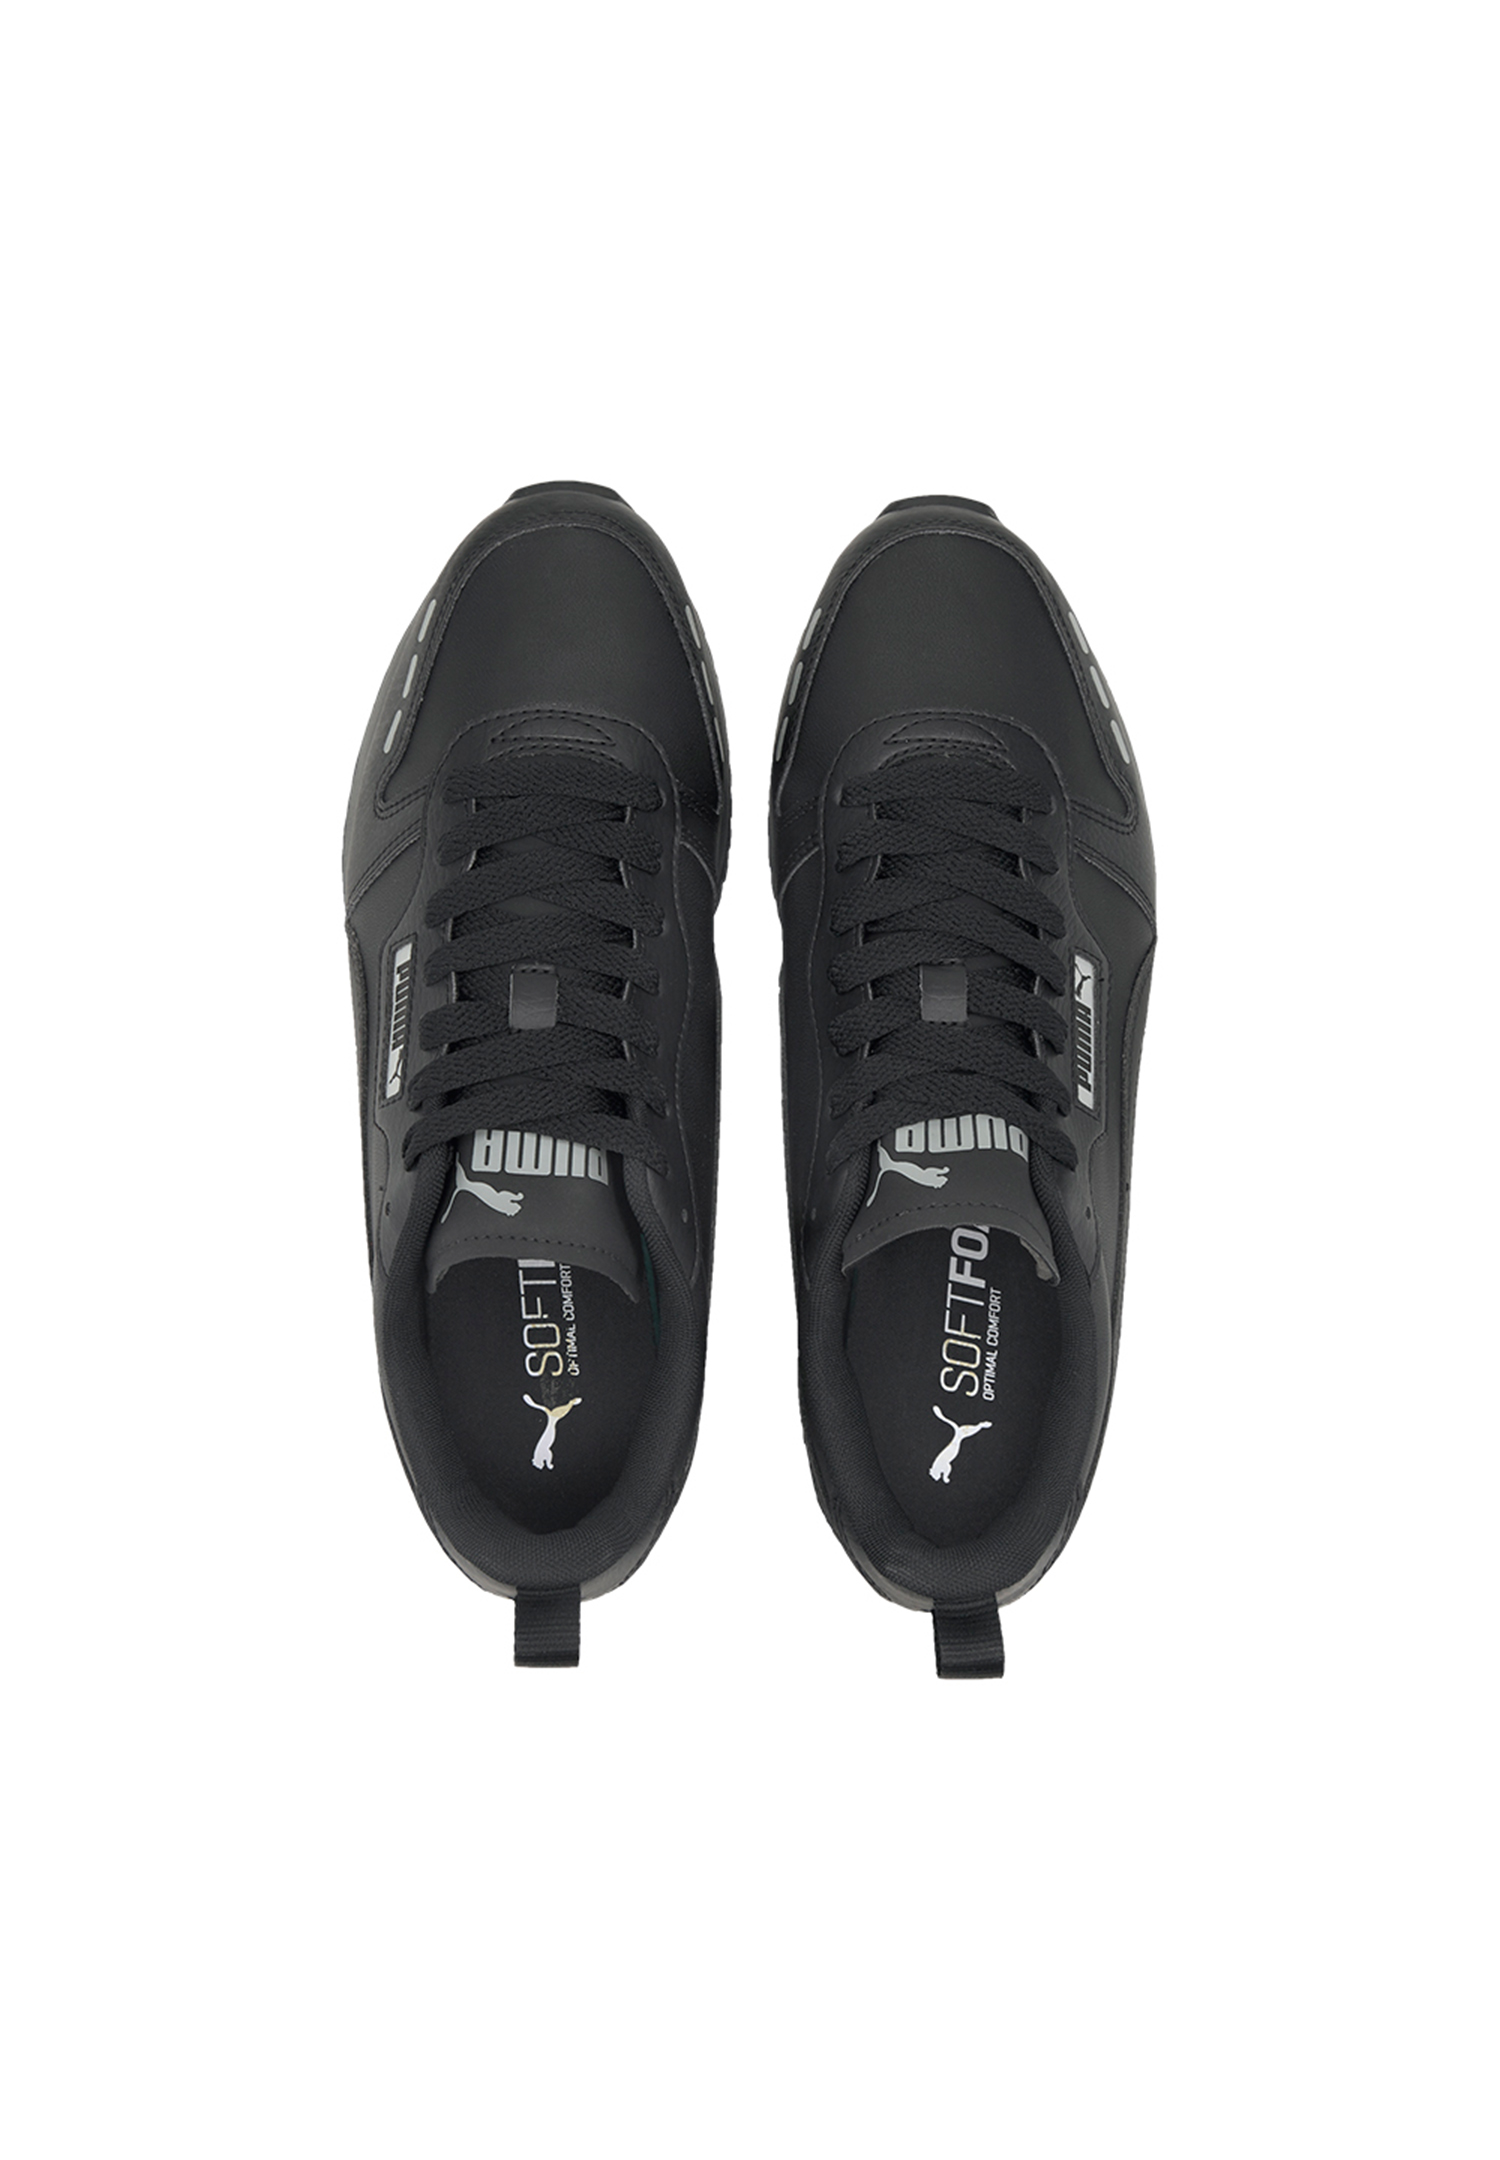 Puma R78 SL Runner Unisex Sneaker Laufschuhe Sportschuhe 374127 01 schwarz